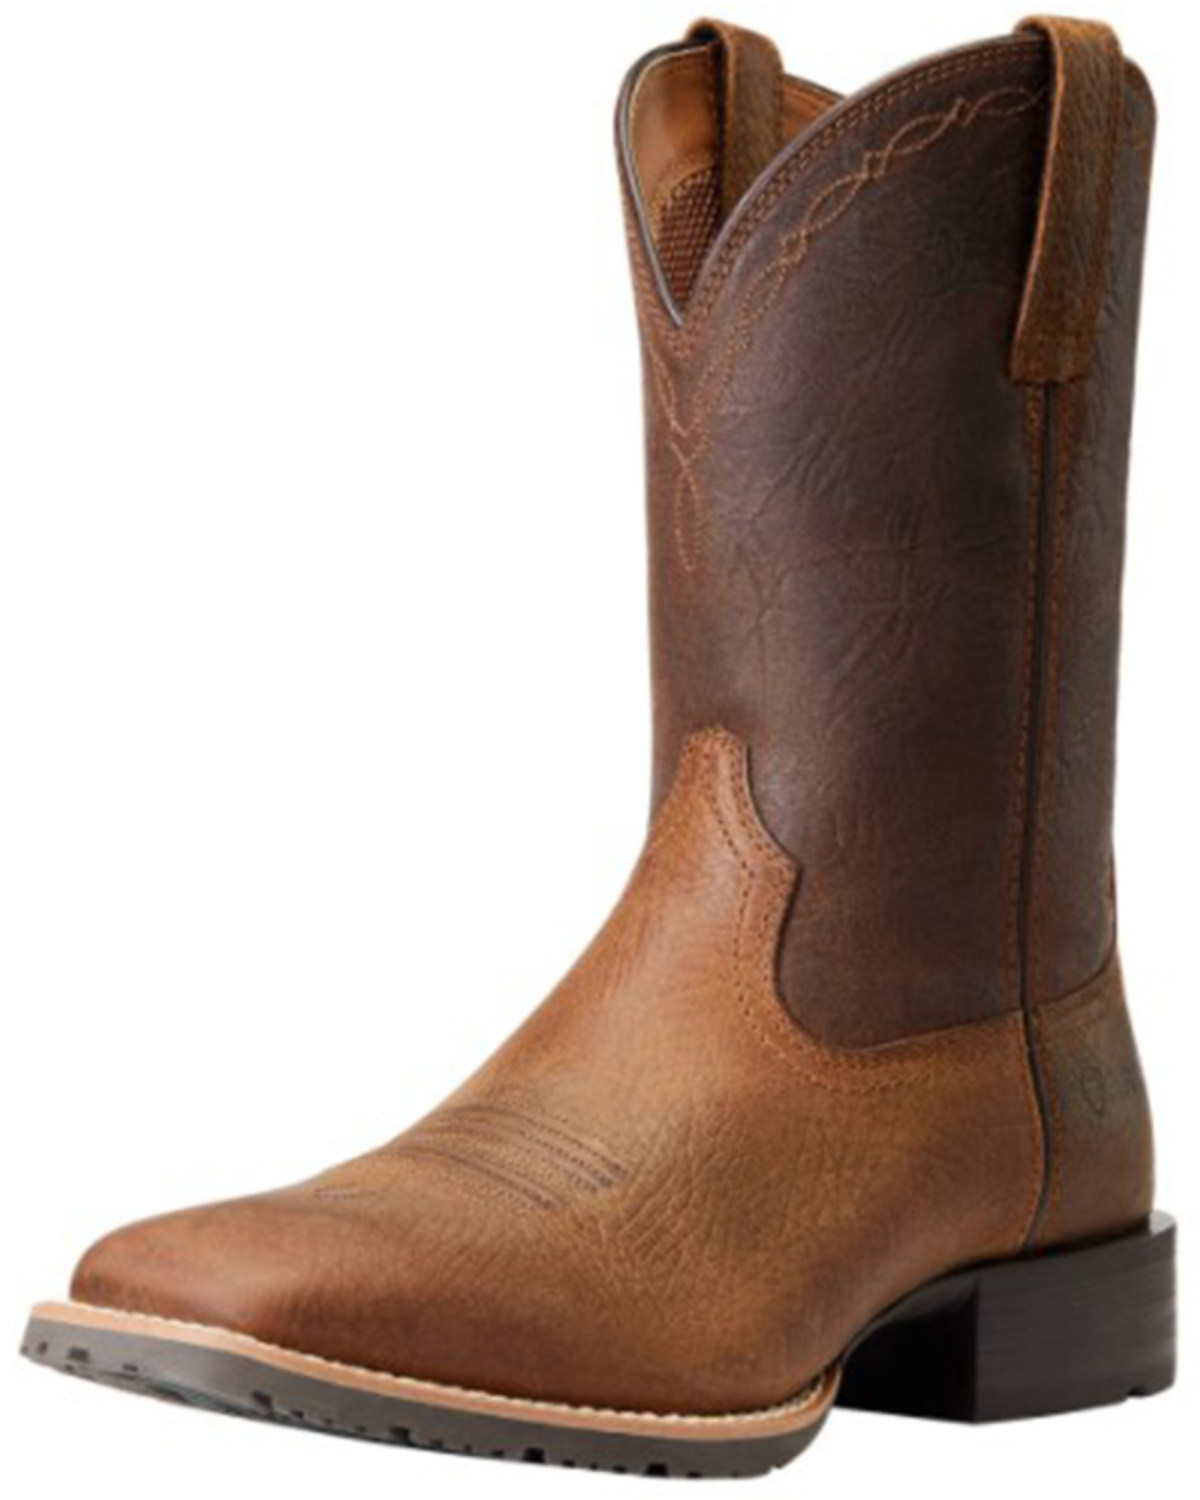 Ariat Men's Hybrid Grit Premium Full-Grain Performance Western Boots - Broad Square Toe